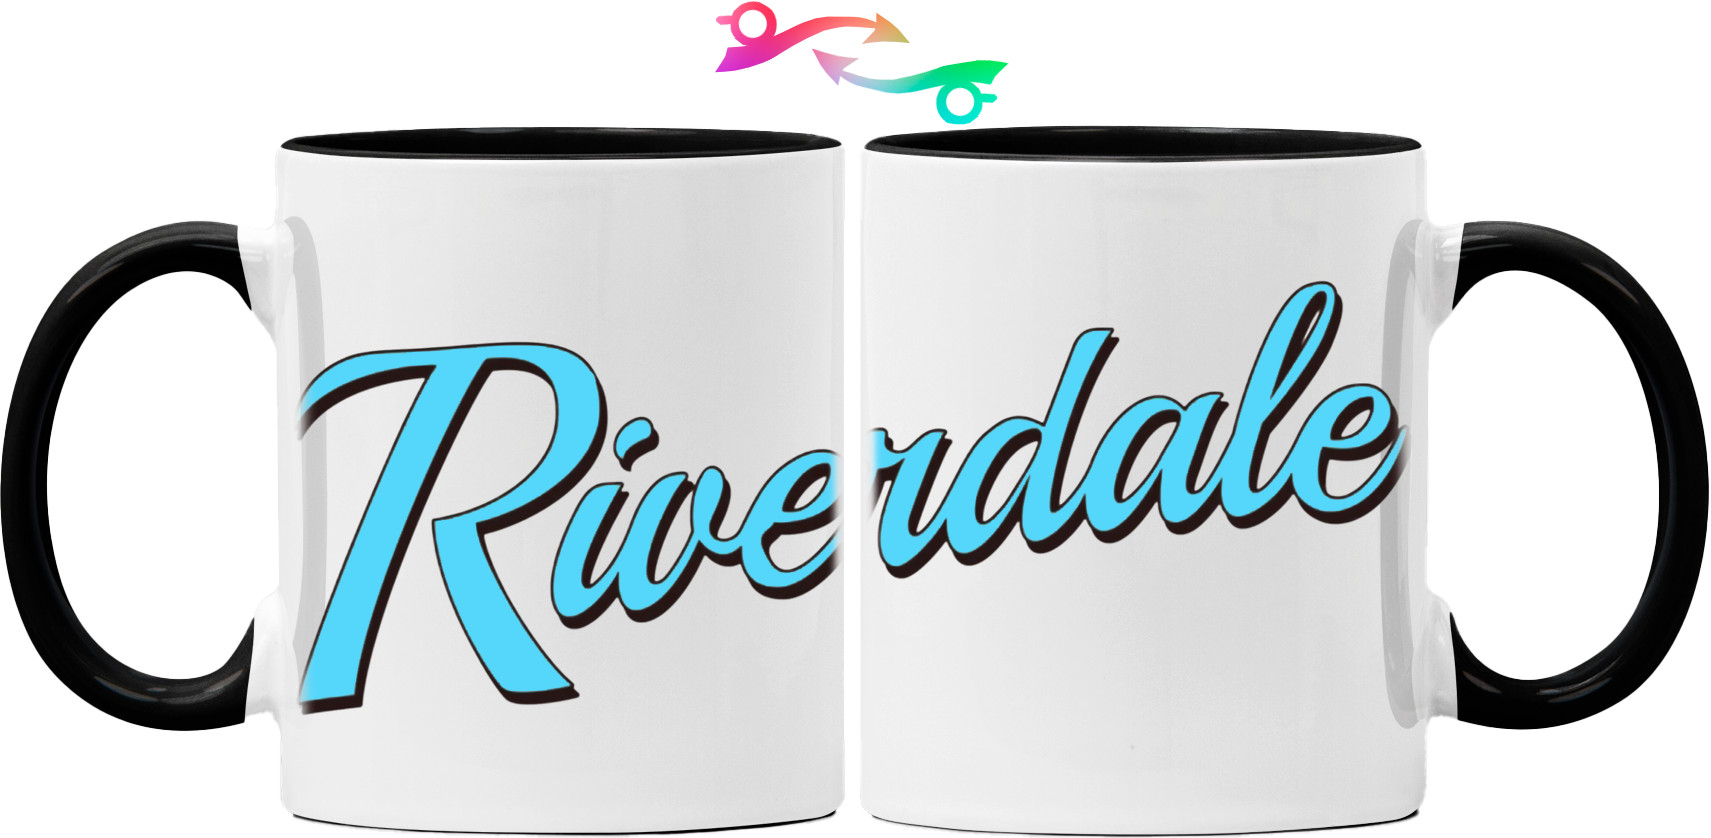 Ривердэйл / Riverdale 3